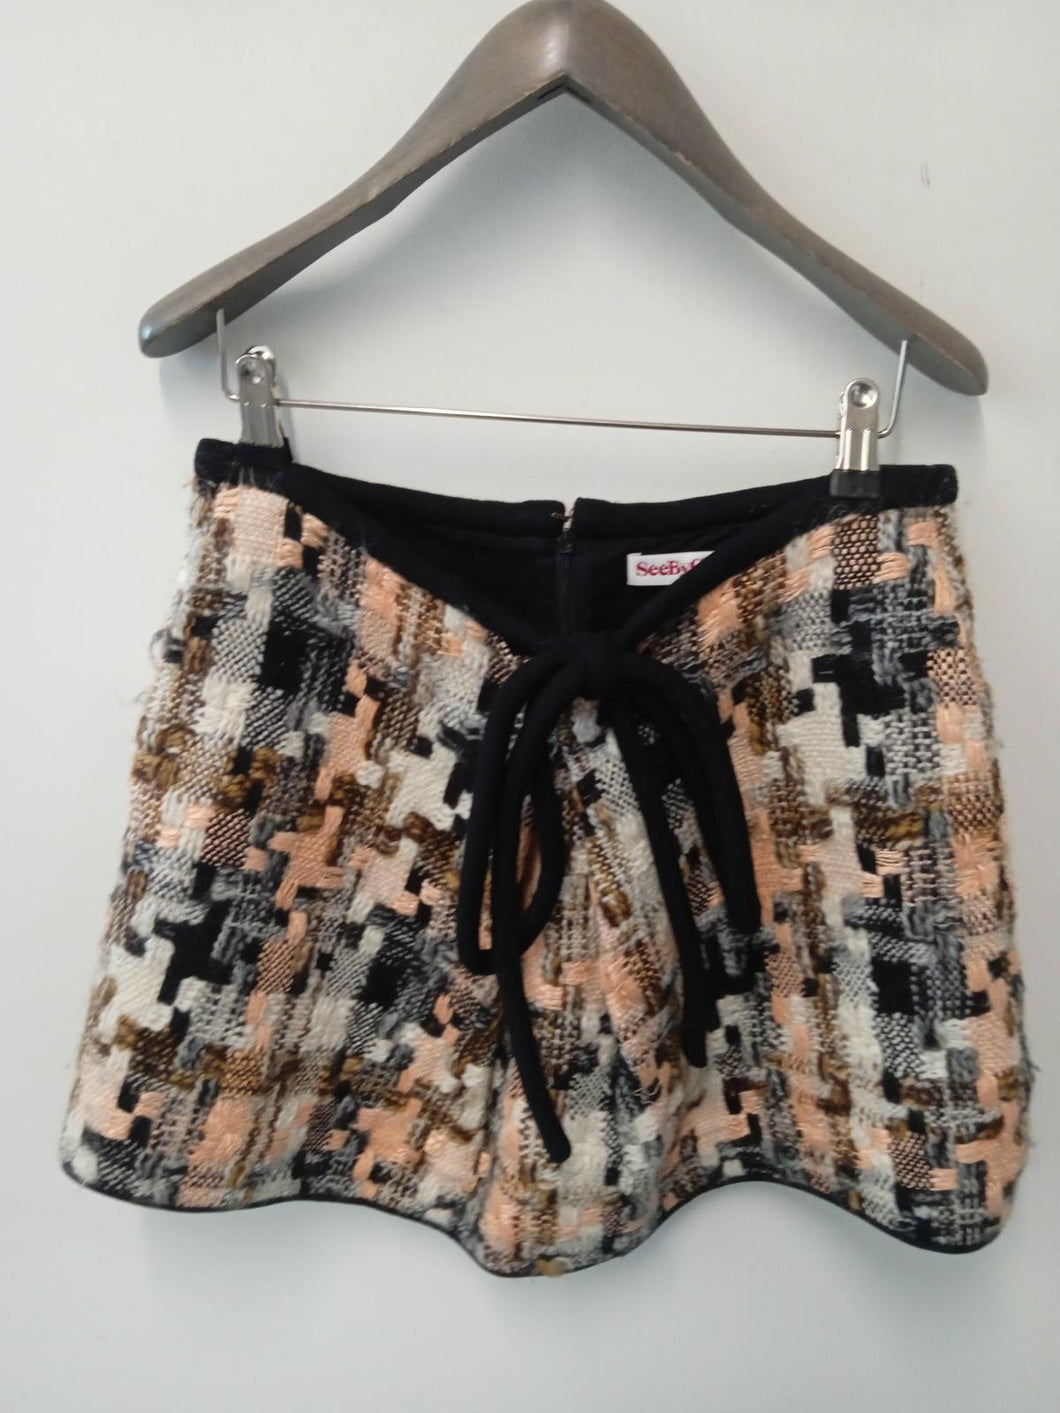 SEEBYCHLOE Ladies Pink Waist Tie Zip Up Patterned Shorts Size UK8